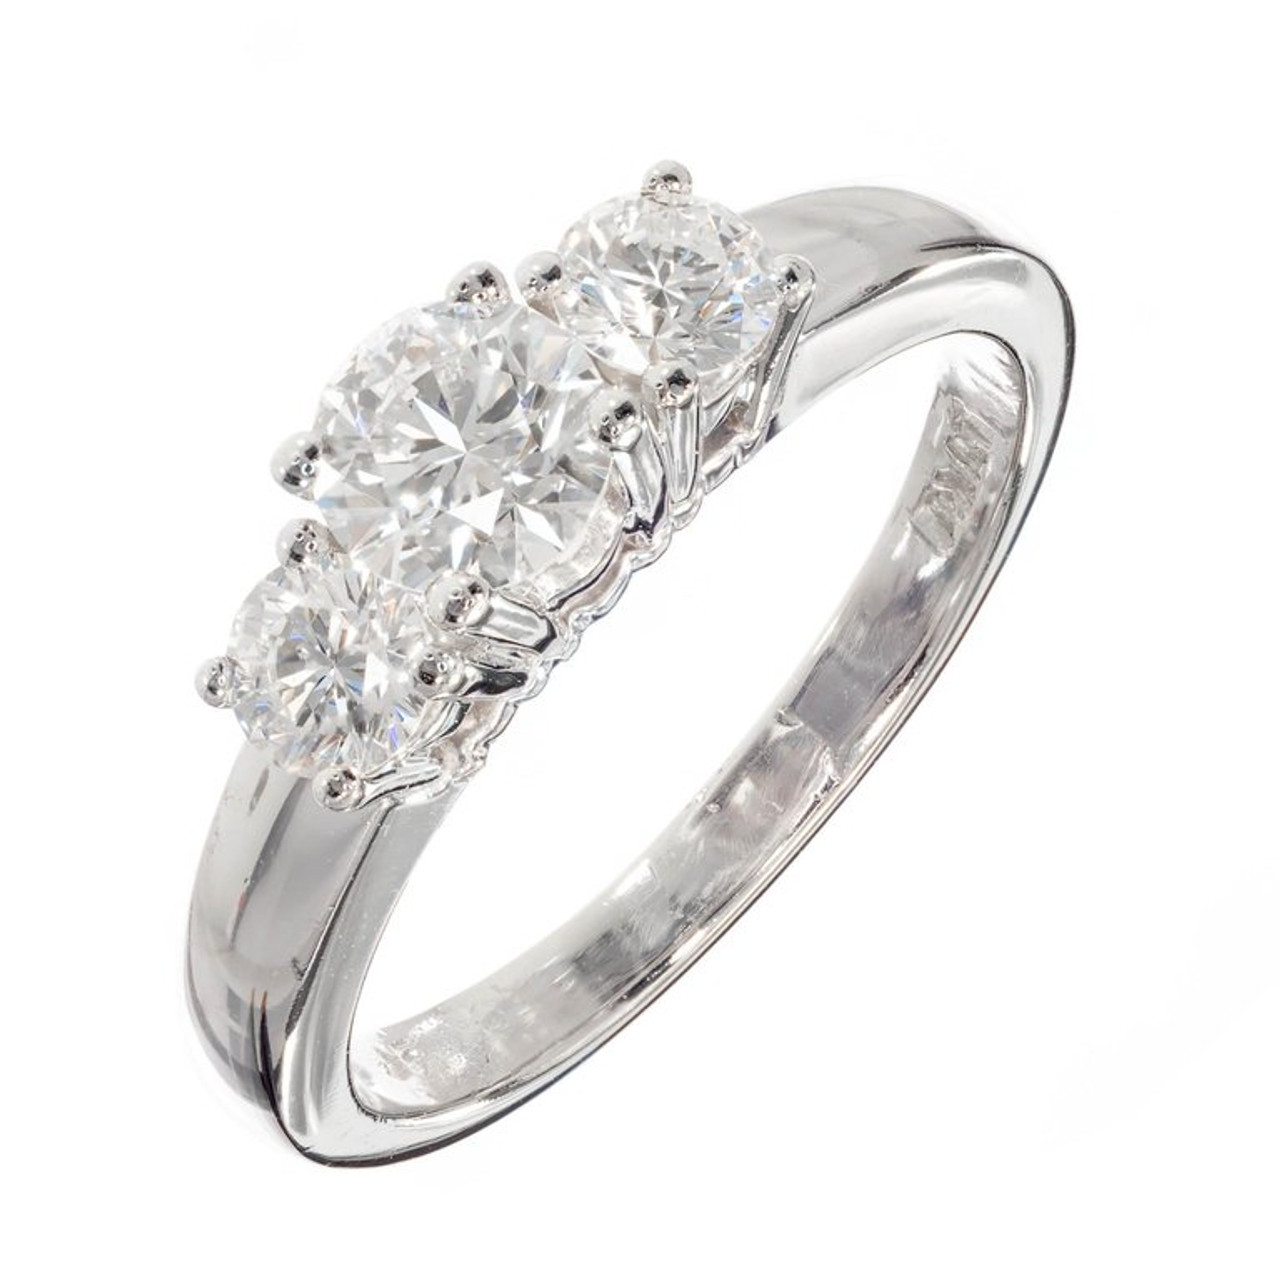 Cushion Cut Diamond Engagement Ring with Halo | Birks